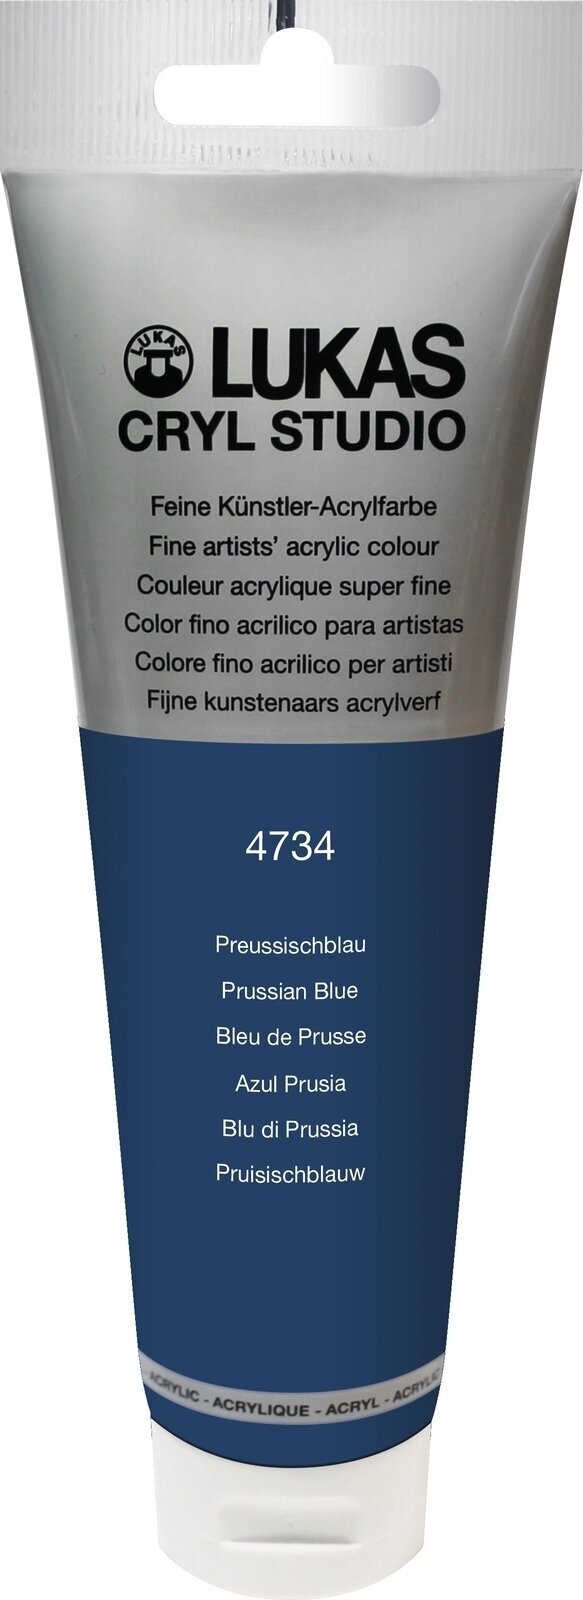 Akrylová farba Lukas Cryl Studio Acrylic Paint Plastic Tube Akrylová farba Prussian Blue 125 ml 1 ks